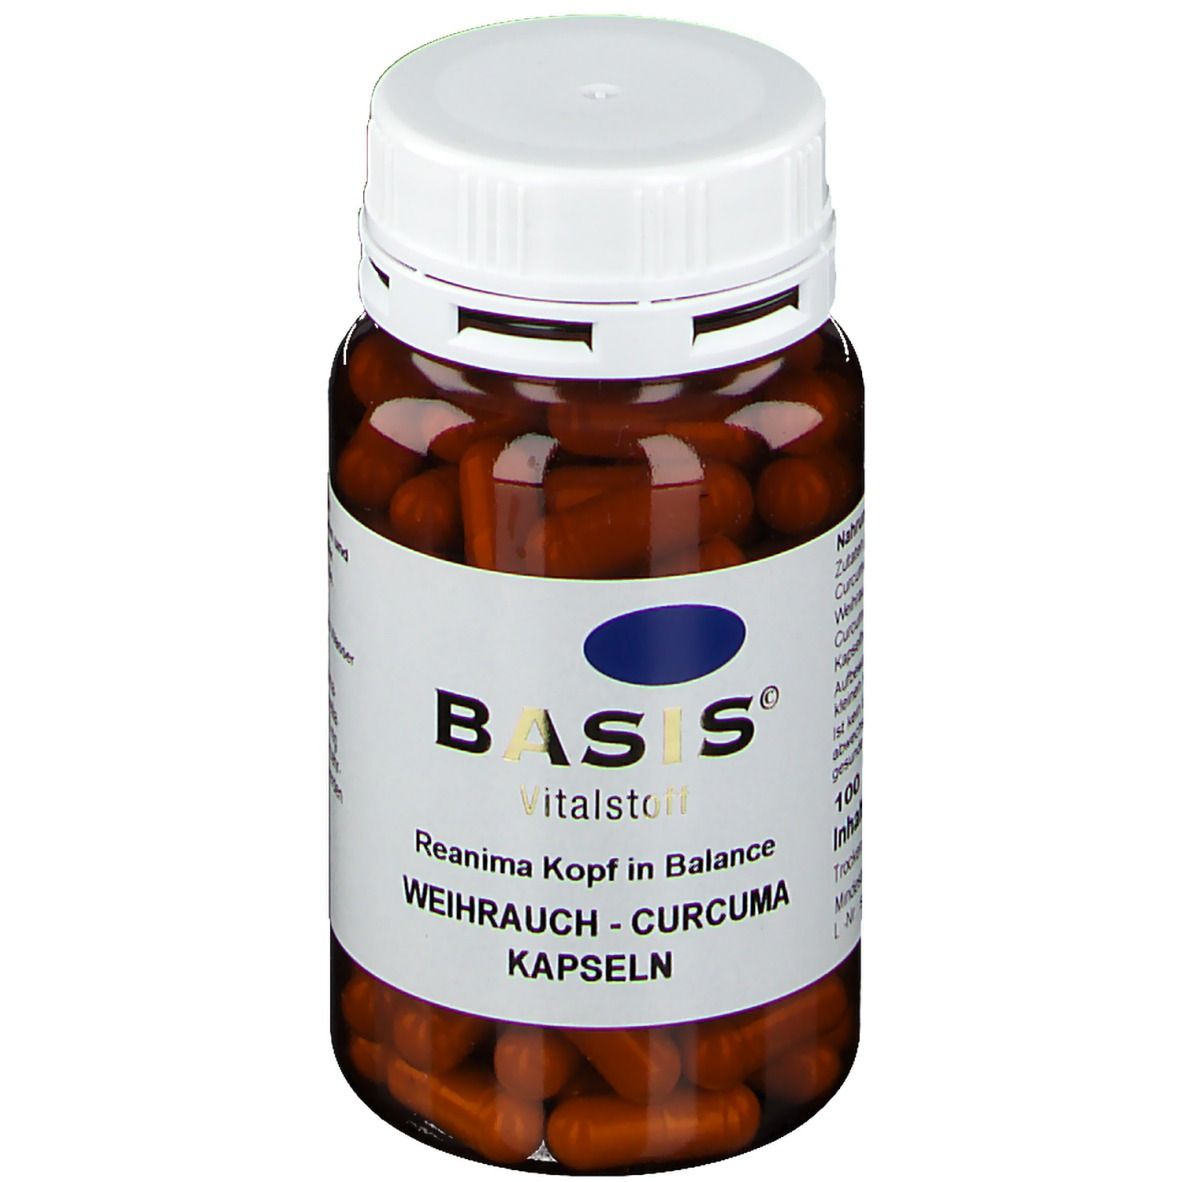 Basis® Vitalstoff Reanima Kopf in Balance Weihrauch-Curcuma